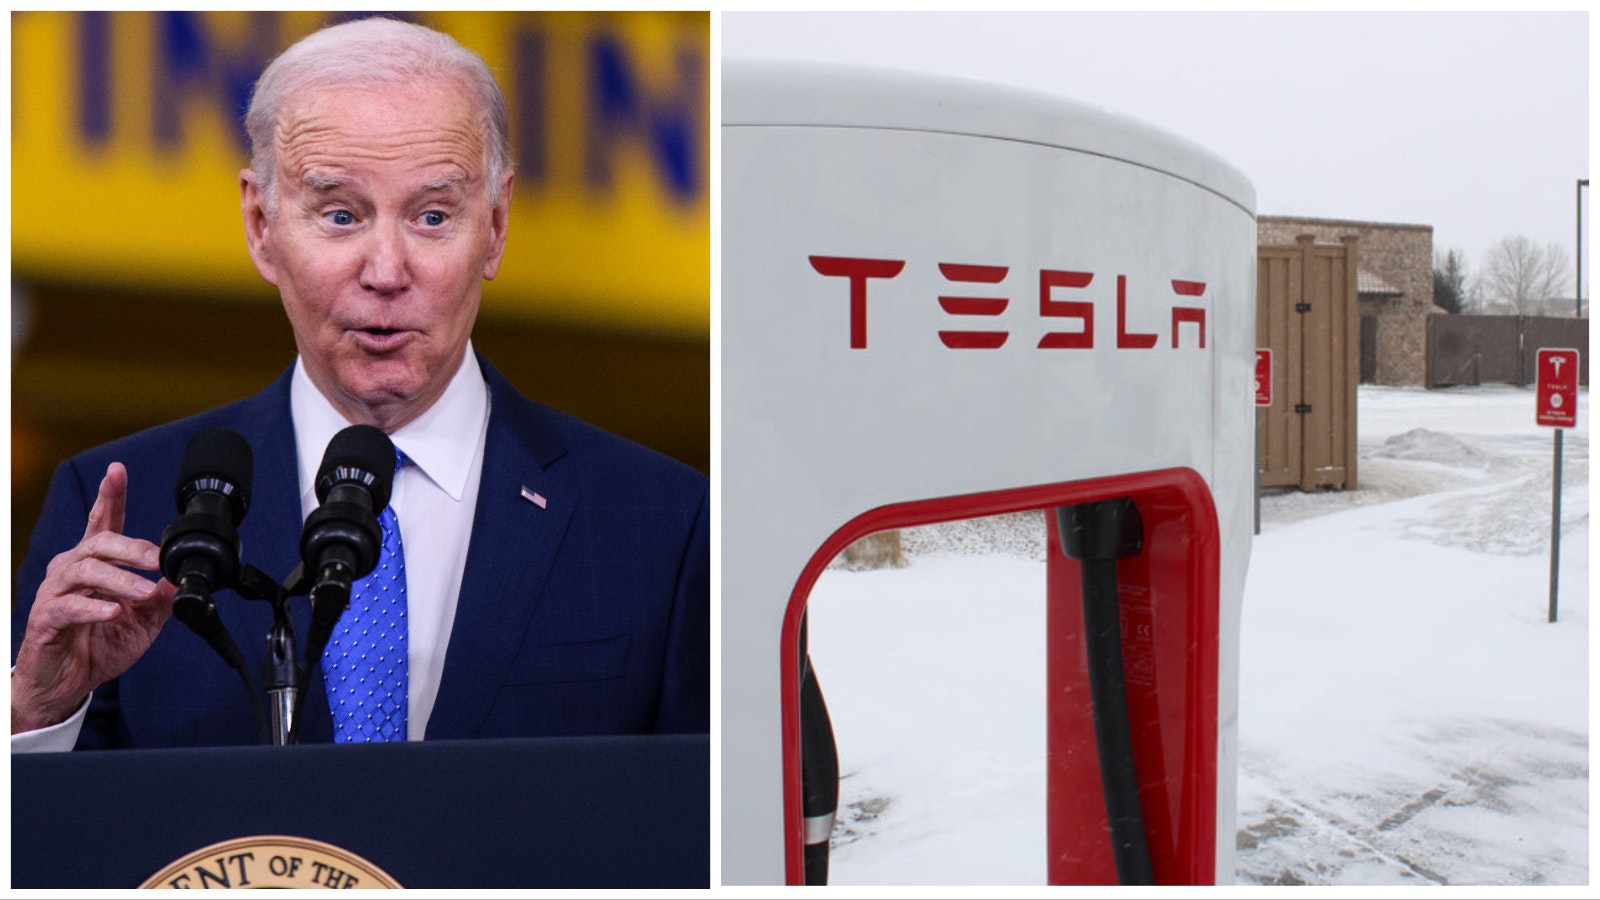 Biden and Tesla chargers 4 3 23